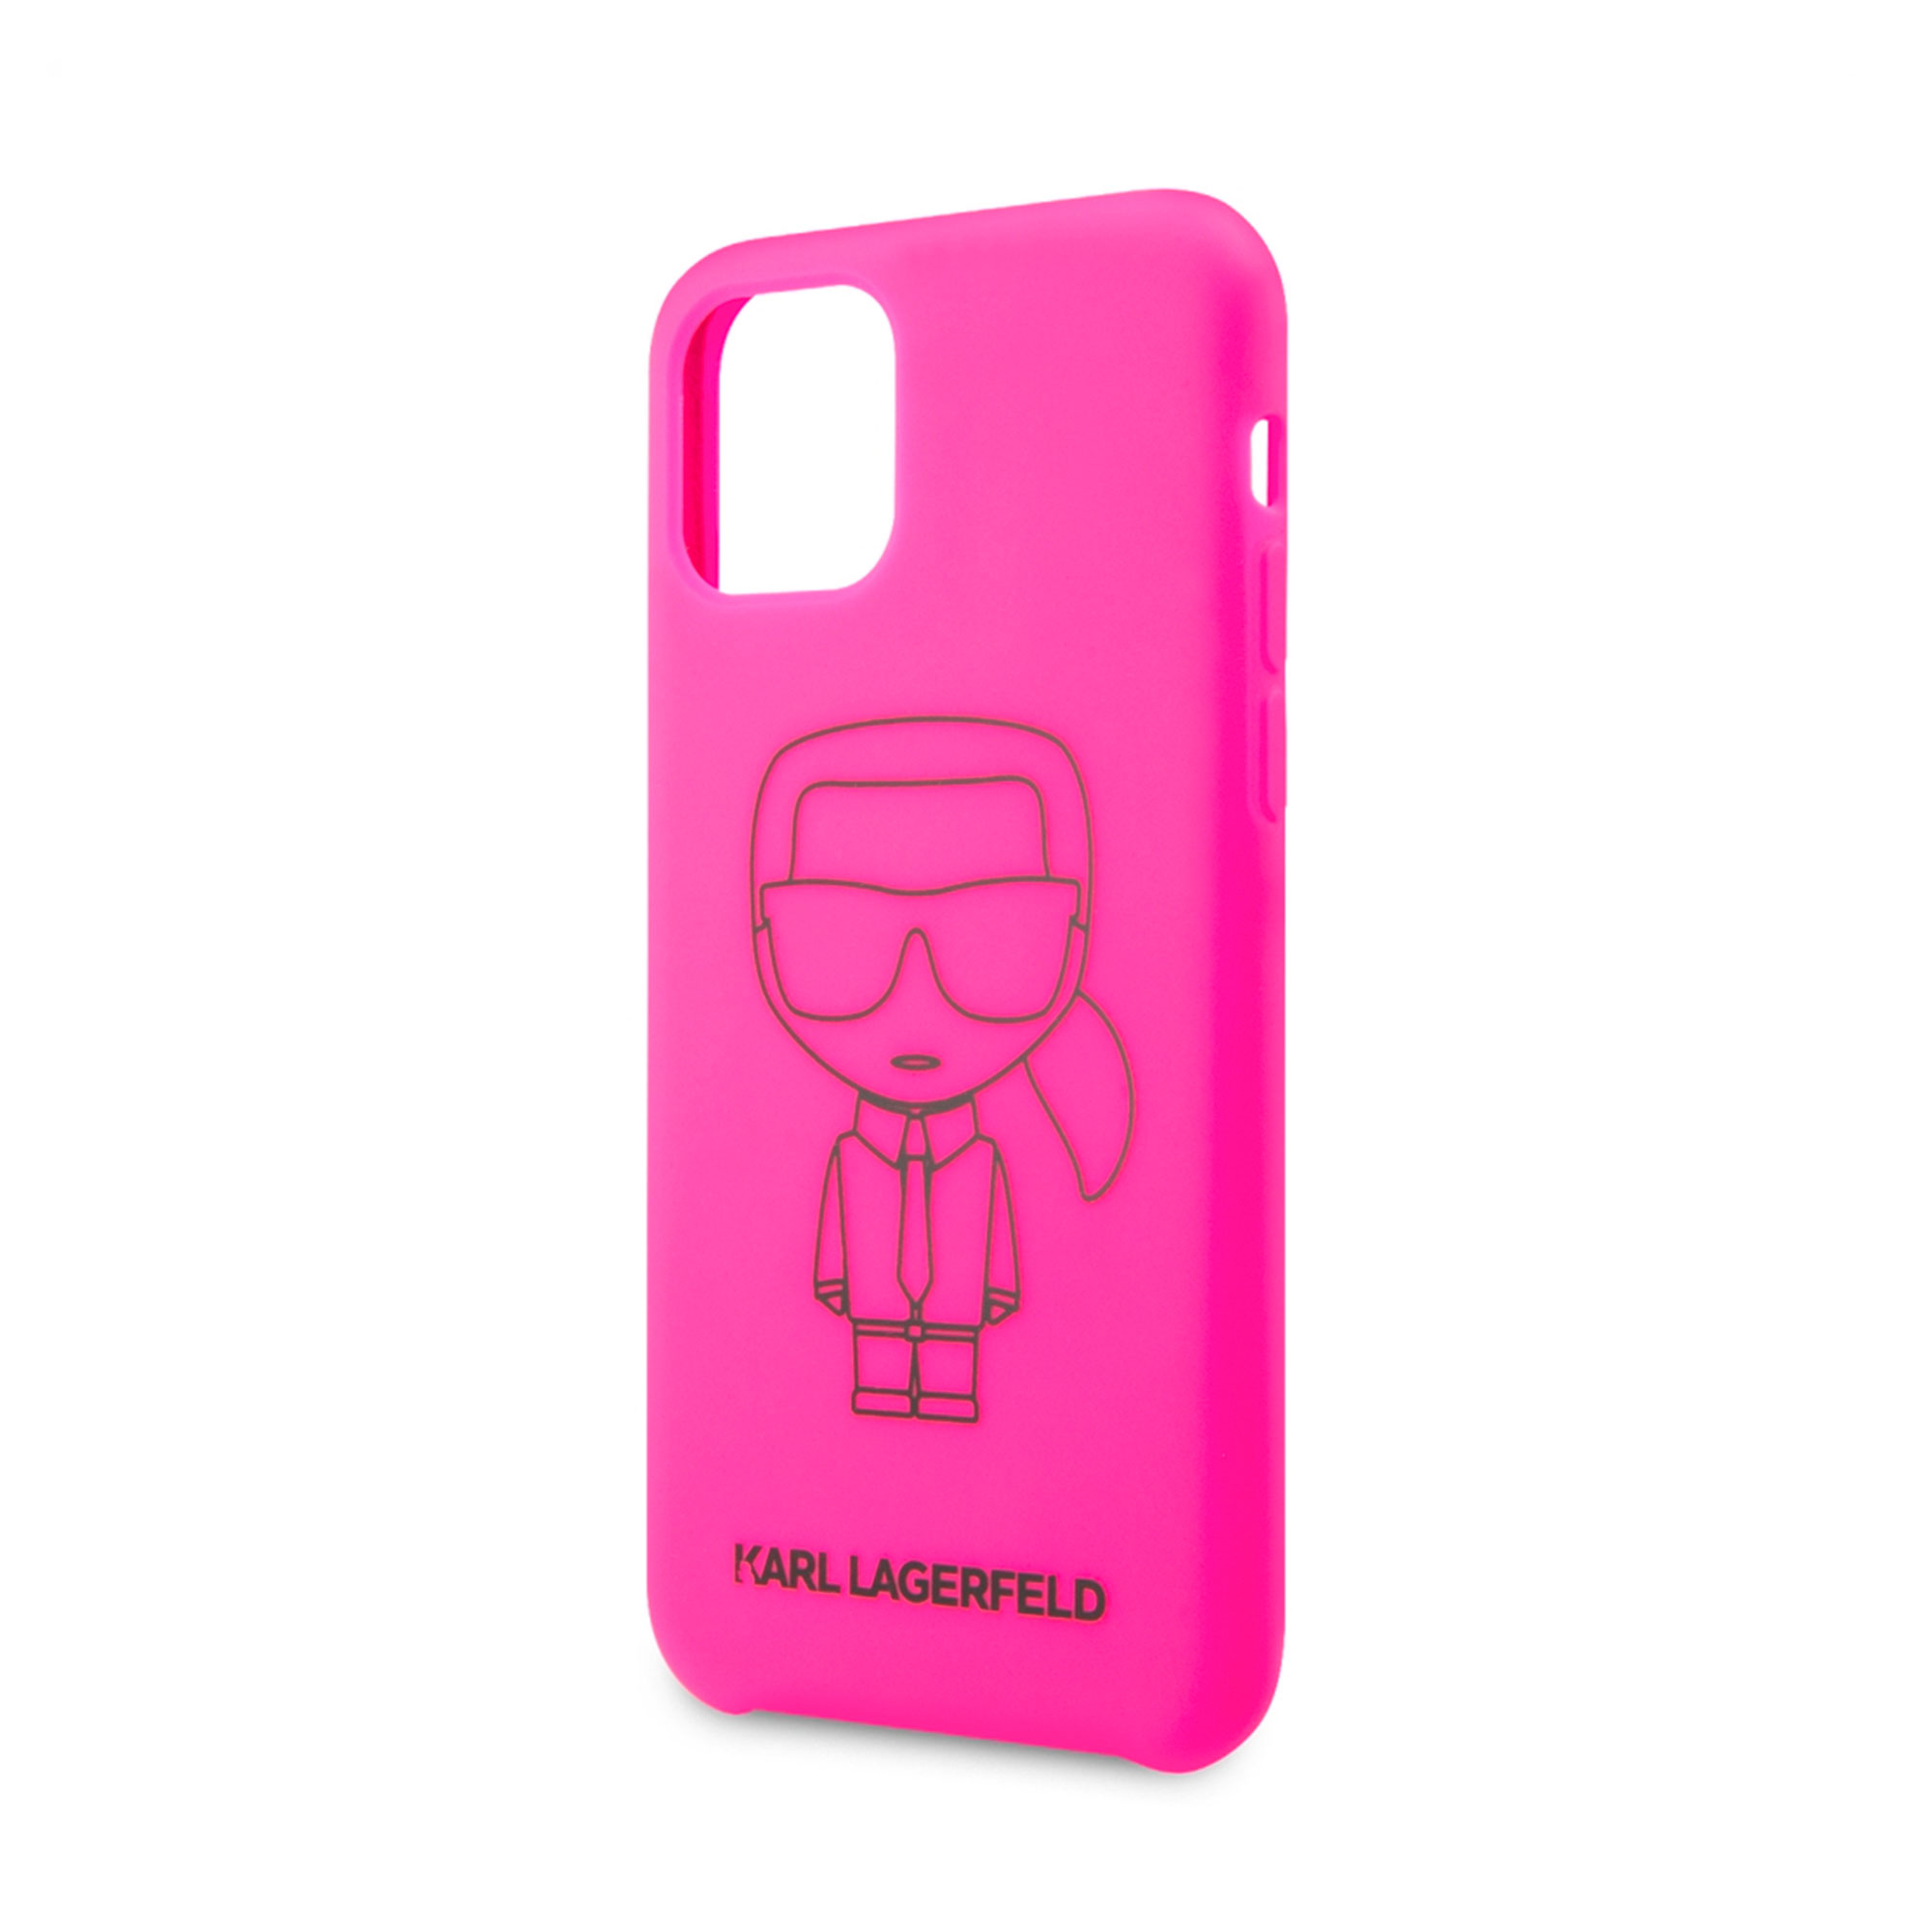 Чехол Lagerfeld для iPhone 11 Pro Liquid silicone Ikonik outlines Hard Pink/Black